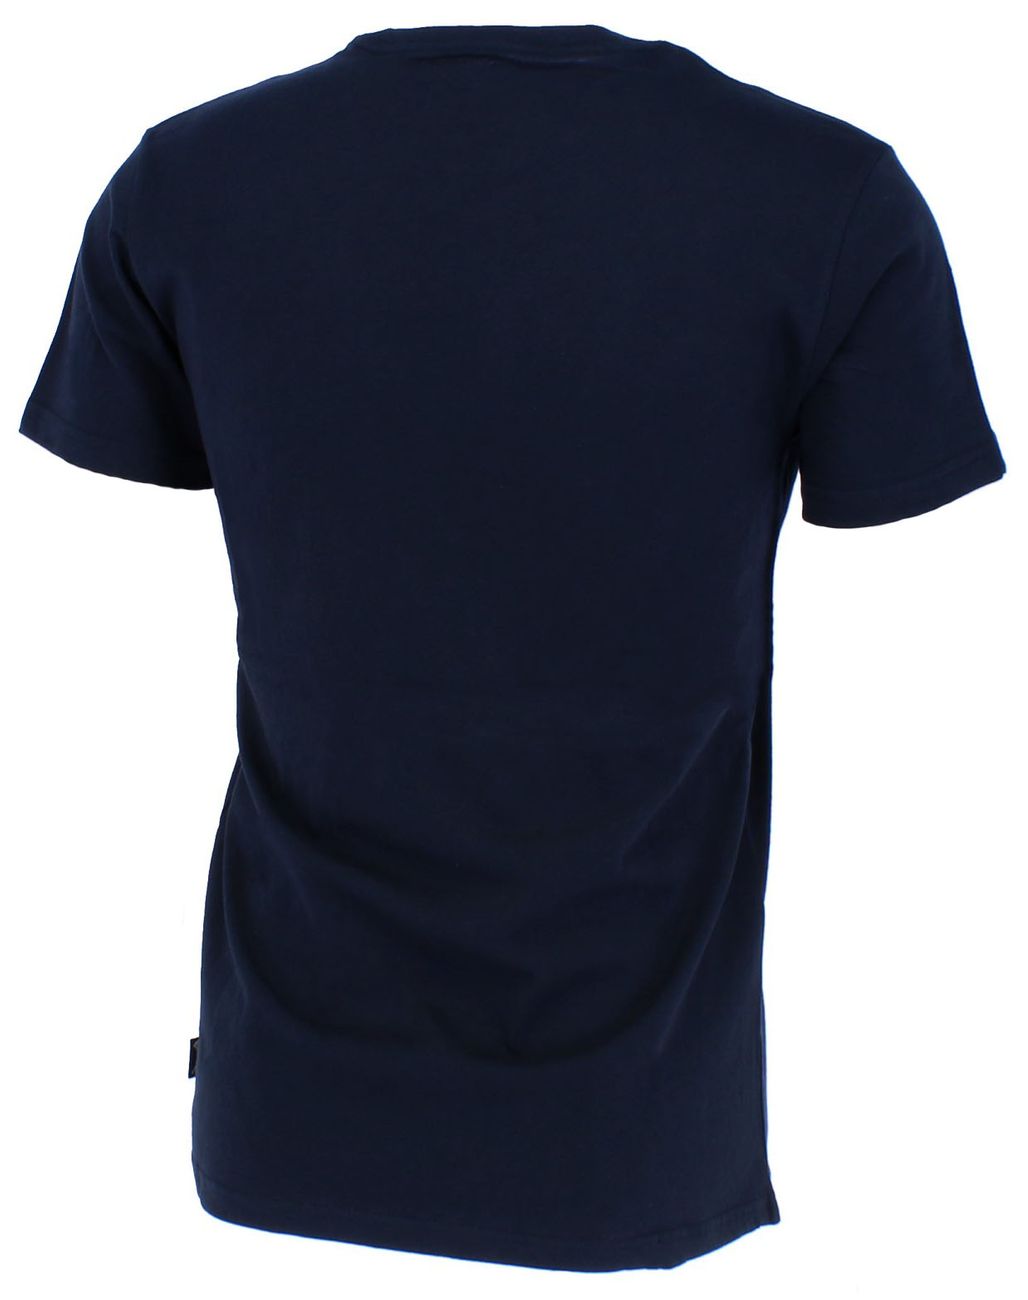 BILLABONG ALLDAY PRINTED CREW Herren T-Shirt mit Brusttasche - BillaBong - SAGATOO - 3664564912413